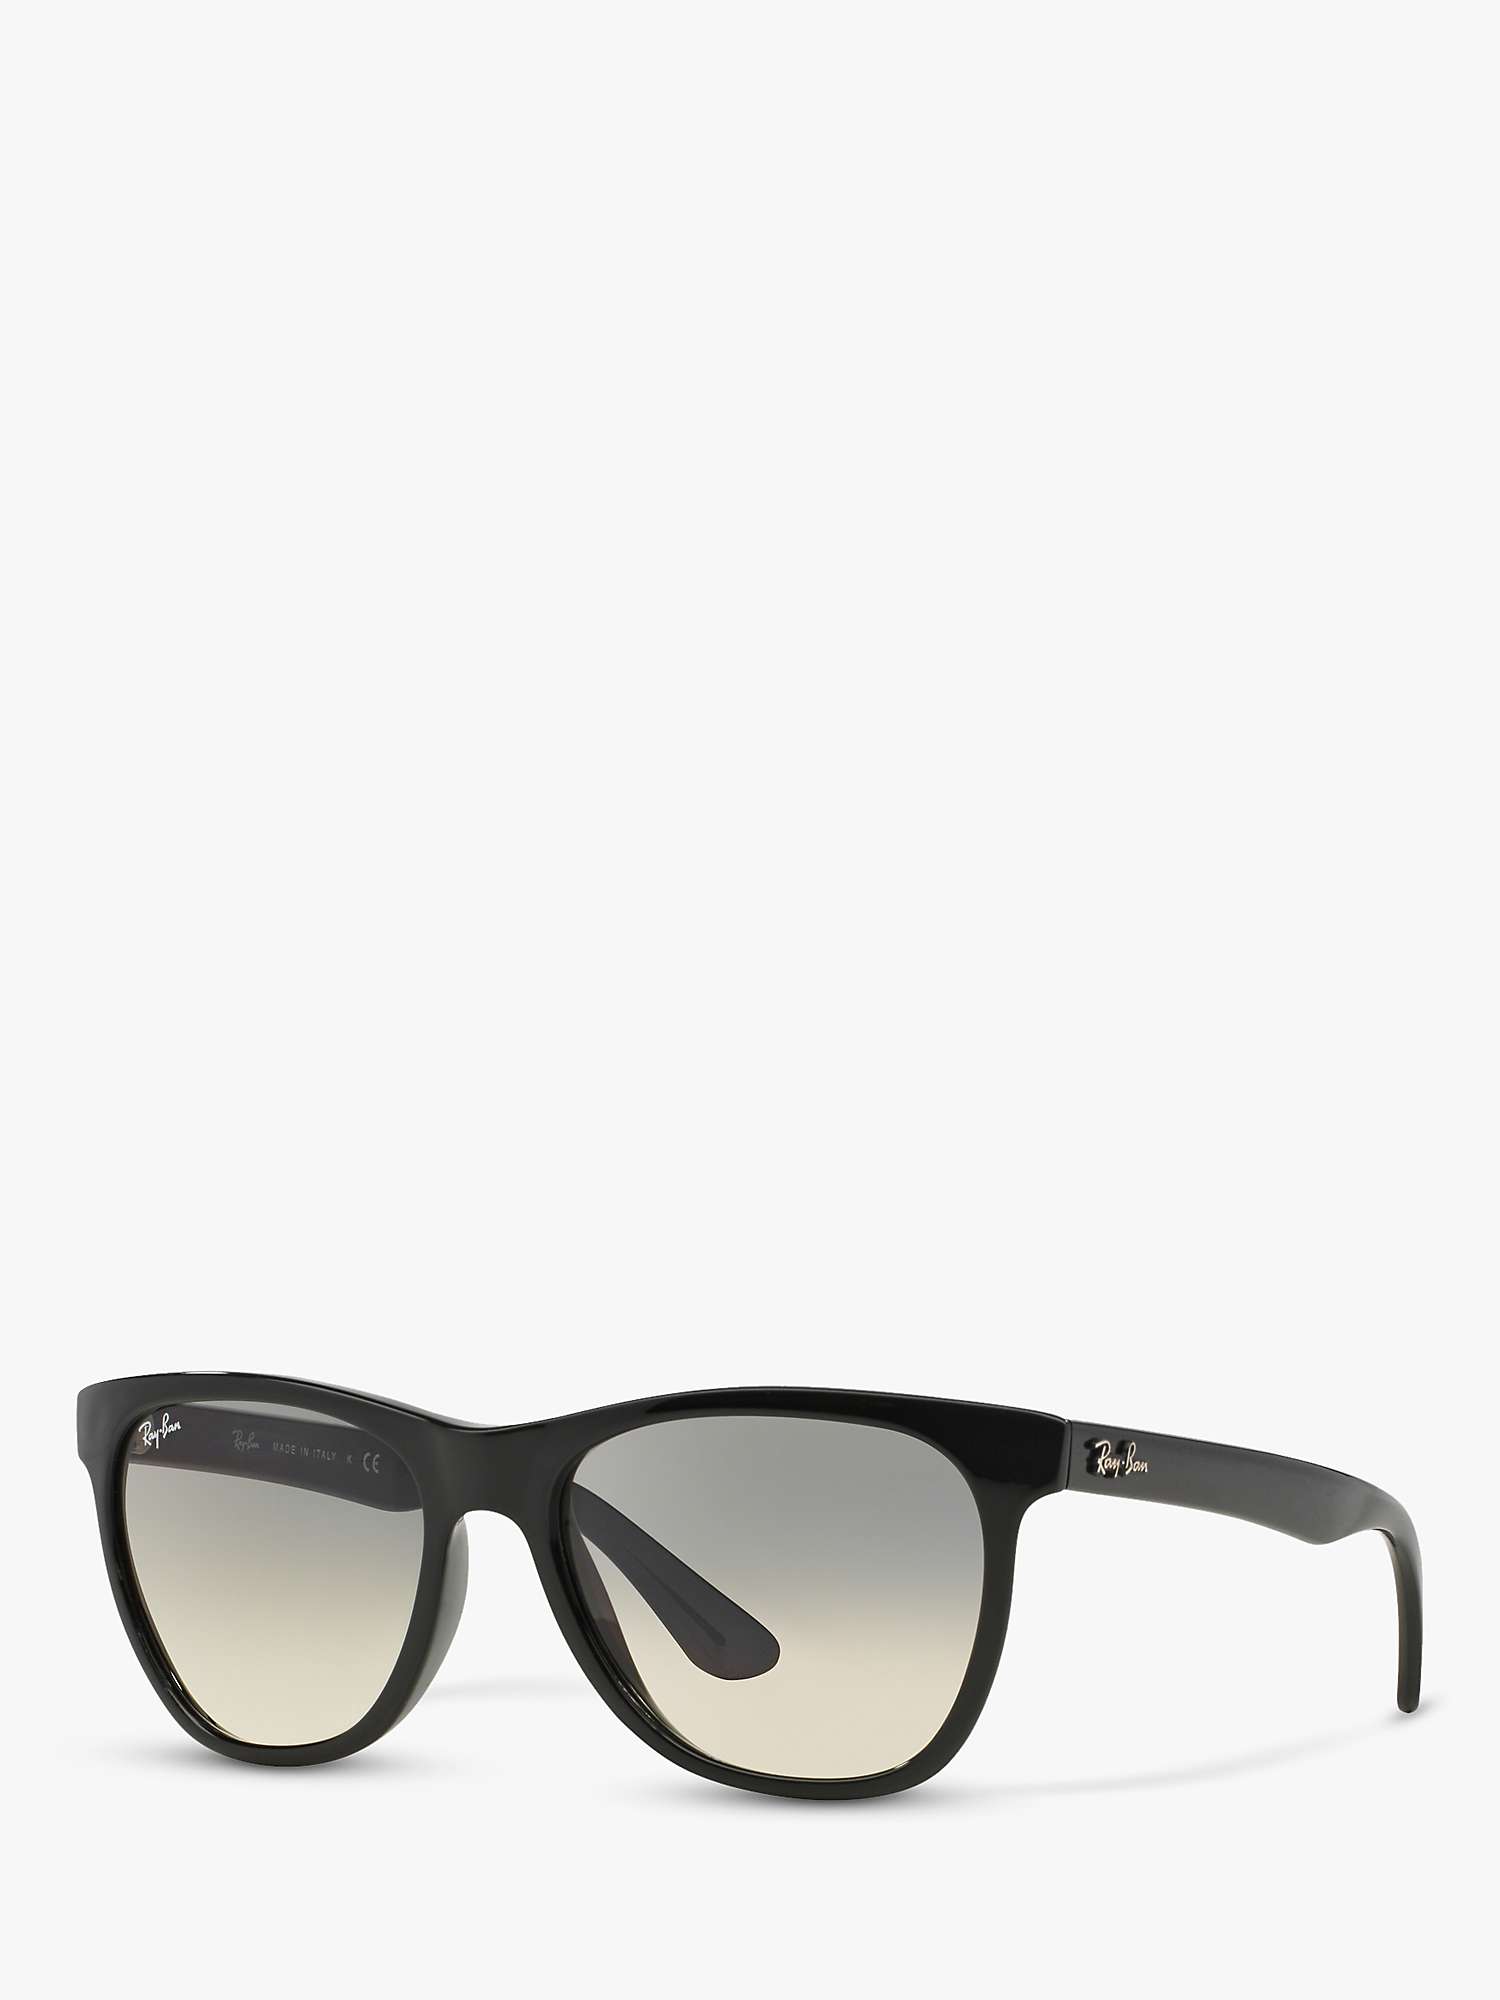 Buy Ray-Ban RB4184 Men's Square Sunglassess, Black/Grey Online at johnlewis.com